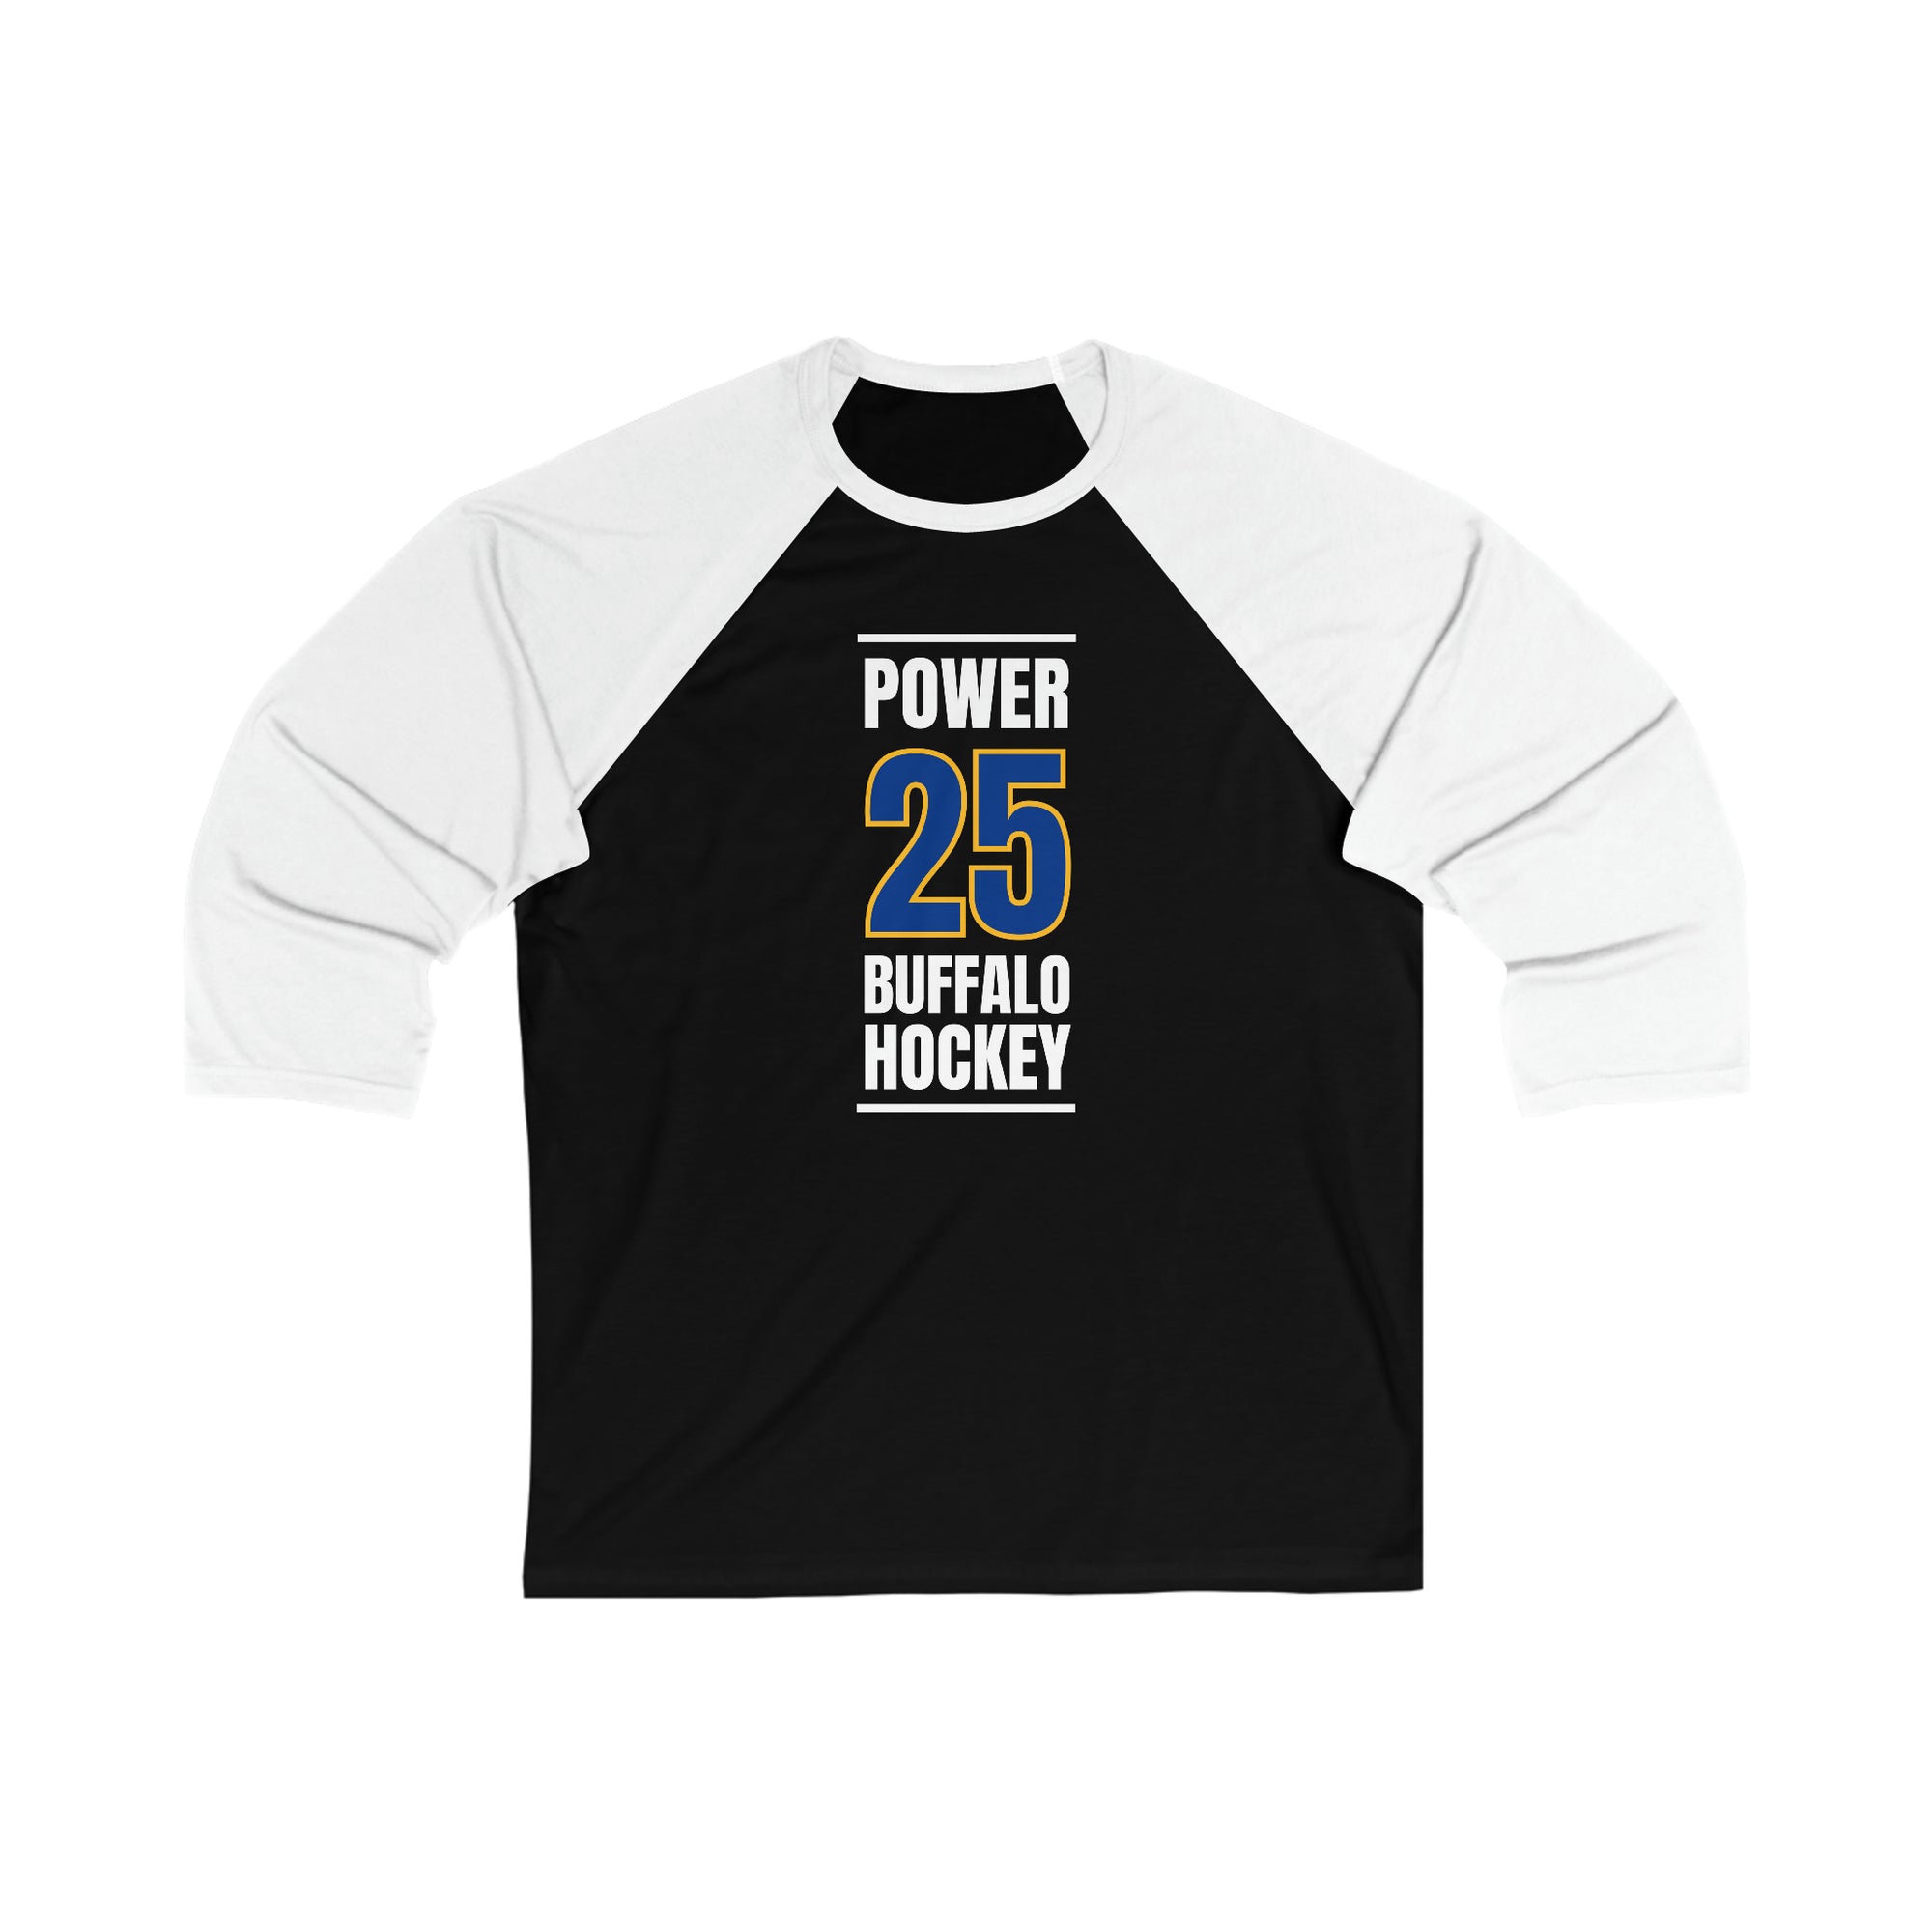 Power 25 Buffalo Hockey Royal Blue Vertical Design Unisex Tri-Blend 3/4 Sleeve Raglan Baseball Shirt